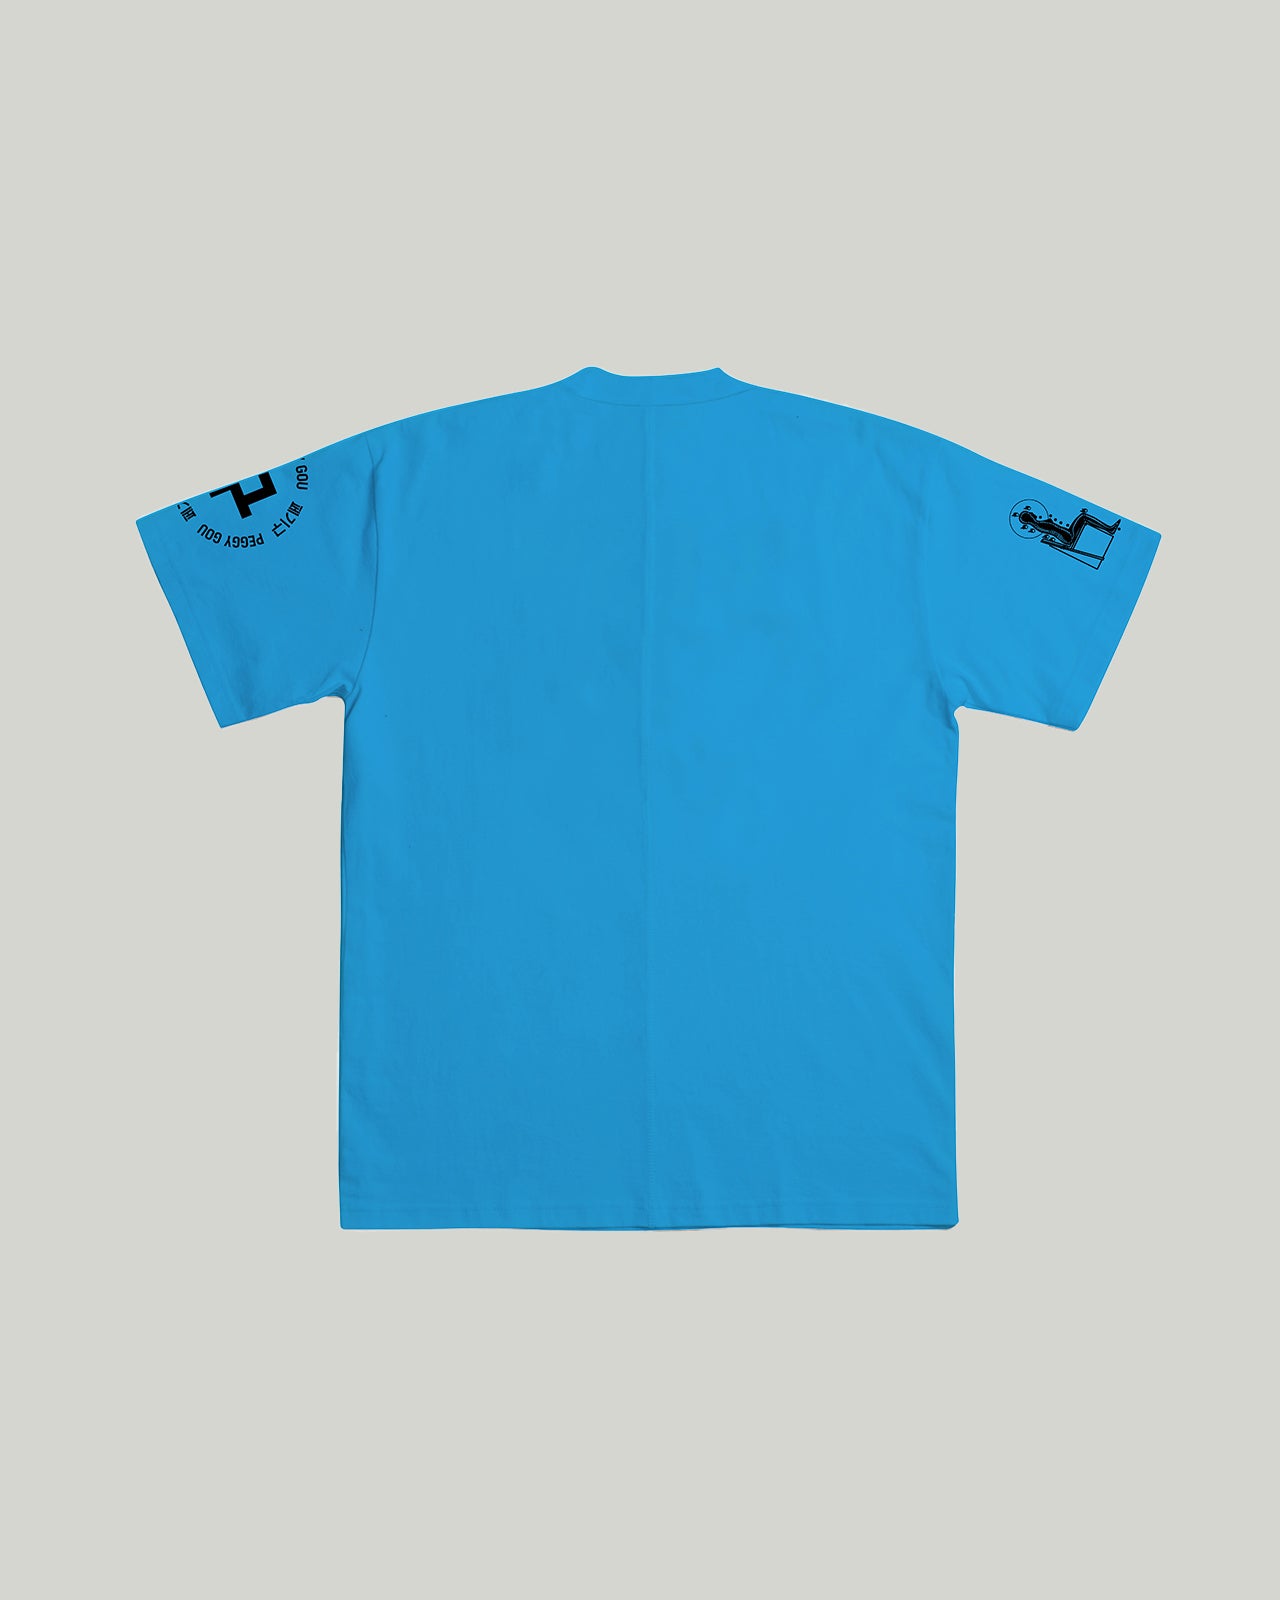 Peggy Gou Closed Loop T-Shirt in Blue